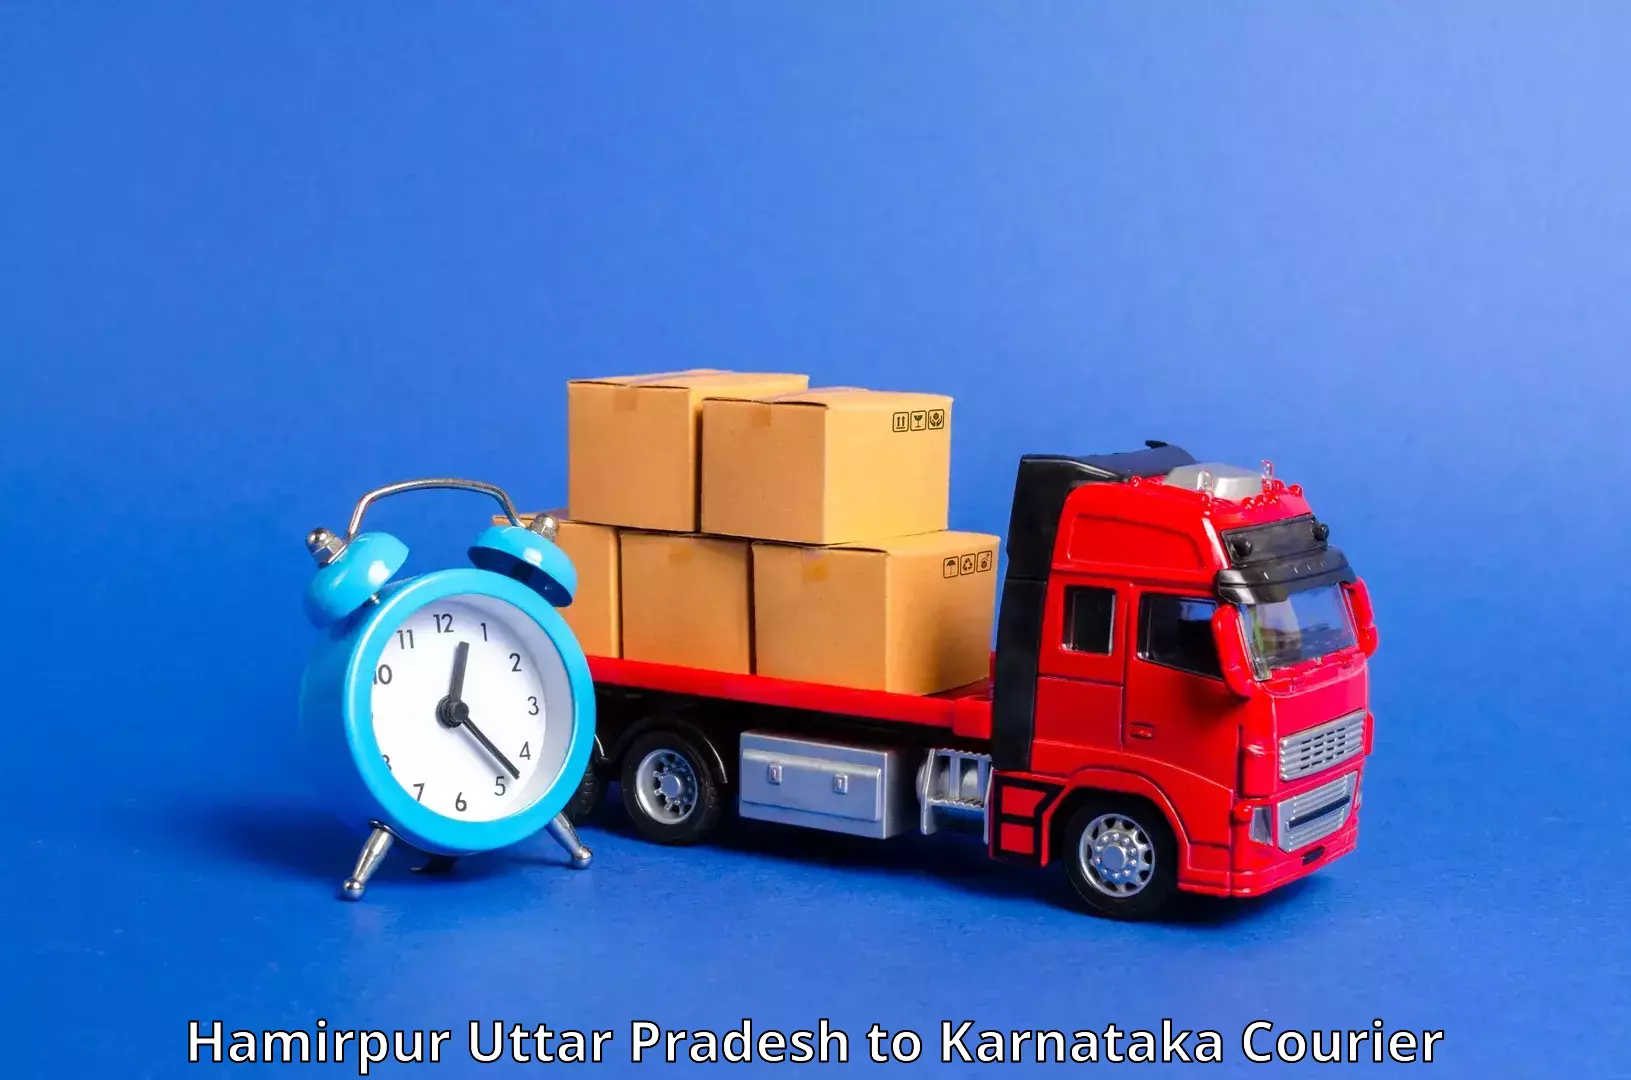 International logistics Hamirpur Uttar Pradesh to Karnataka